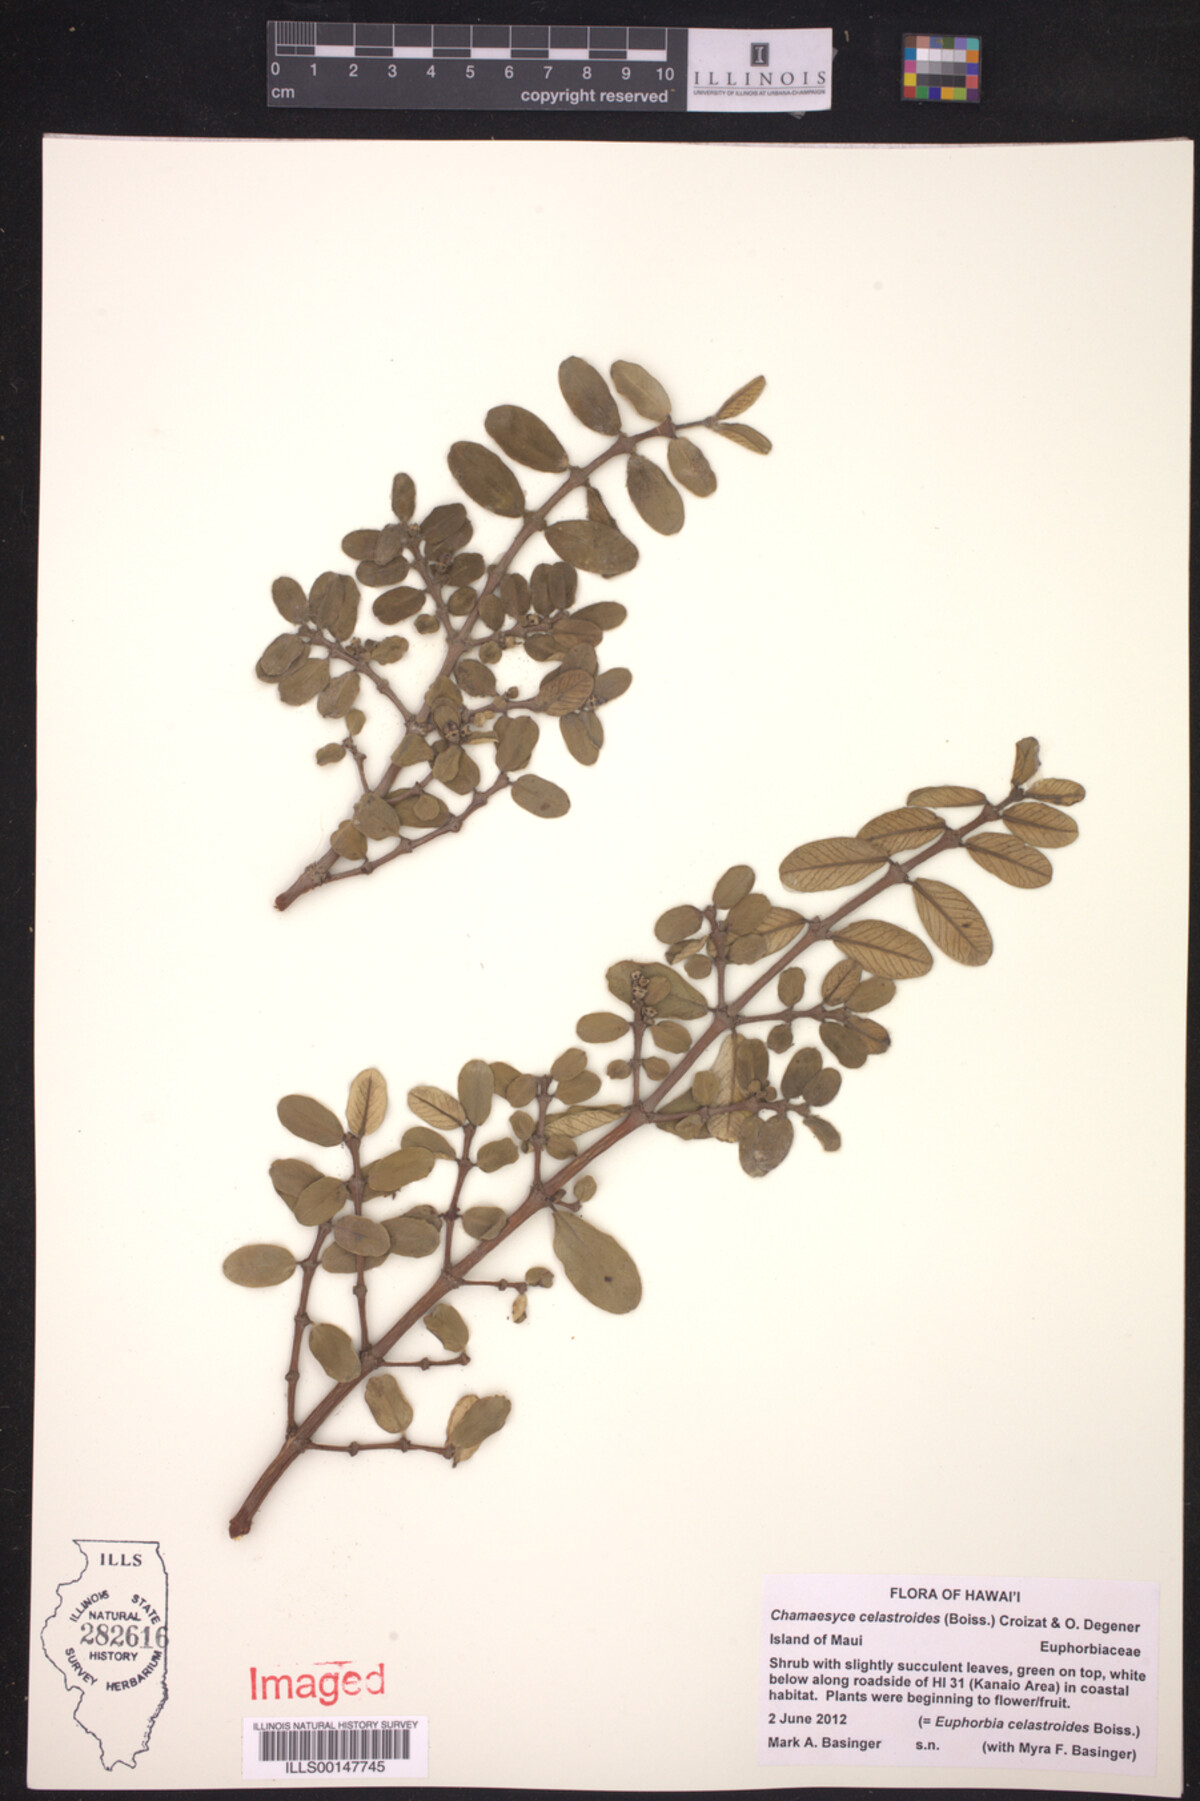 Euphorbia celastroides image